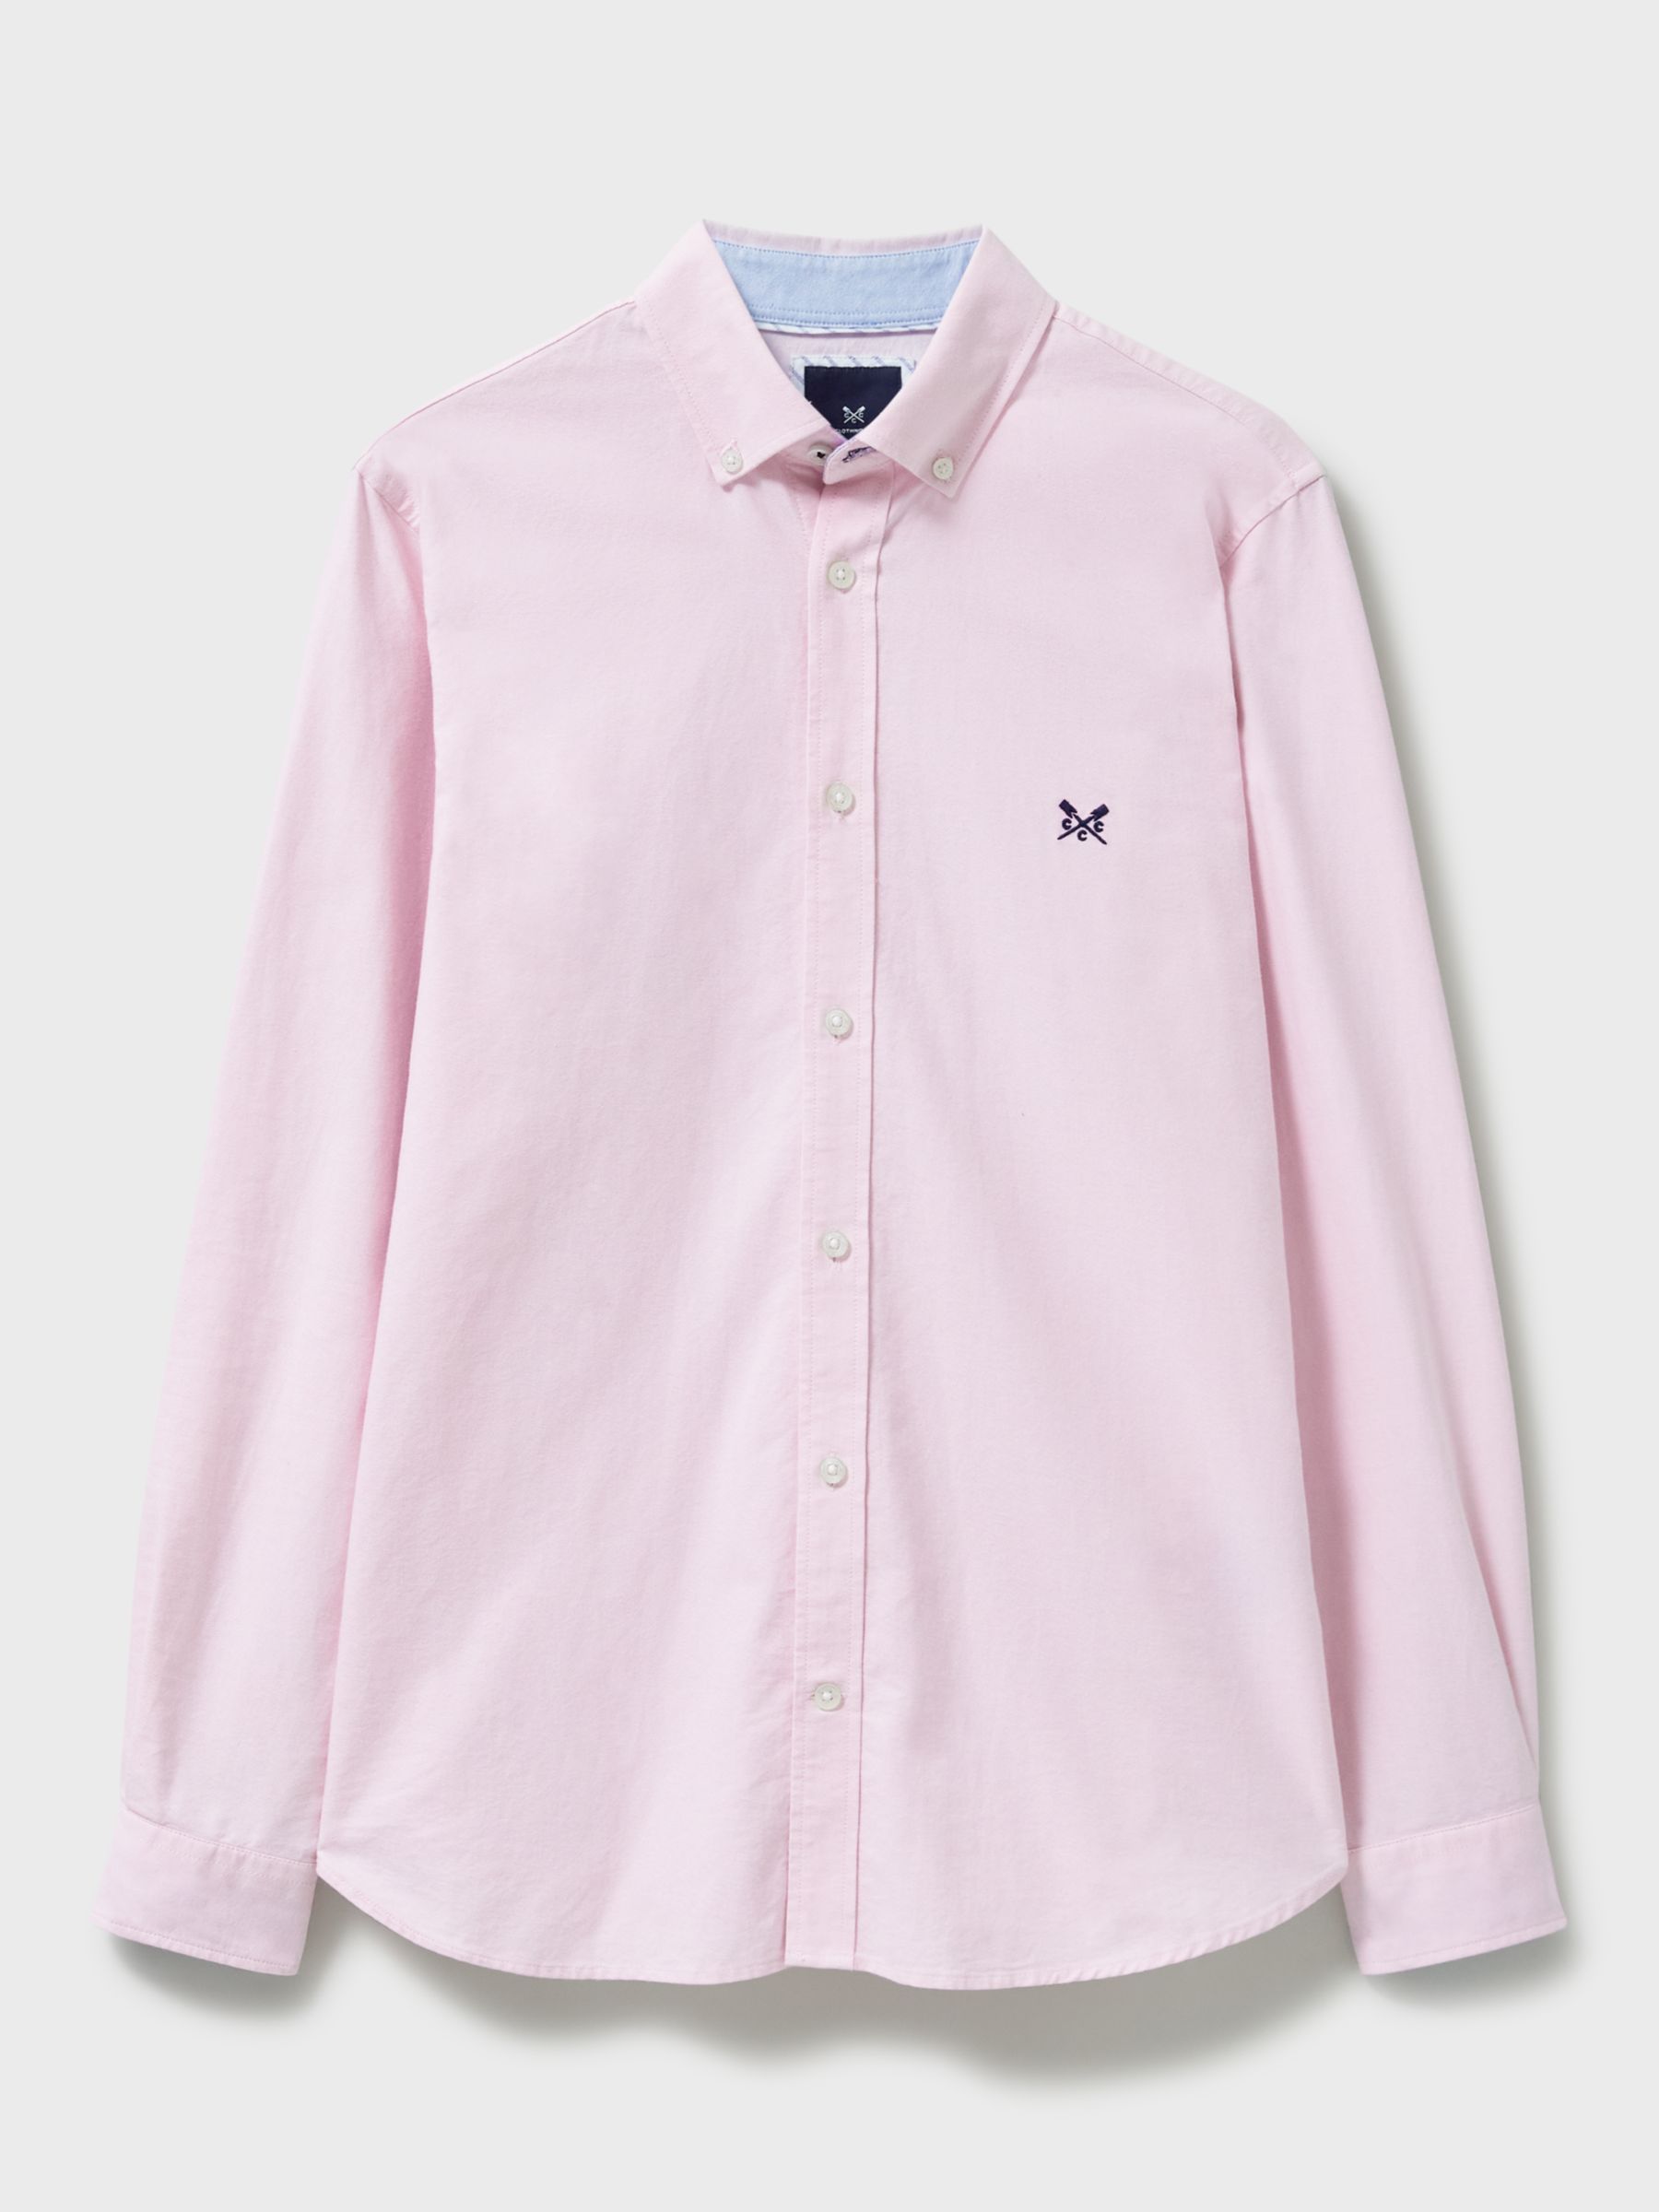 Crew Clothing Slim Fit Oxford Shirt, Pastel Pink, S